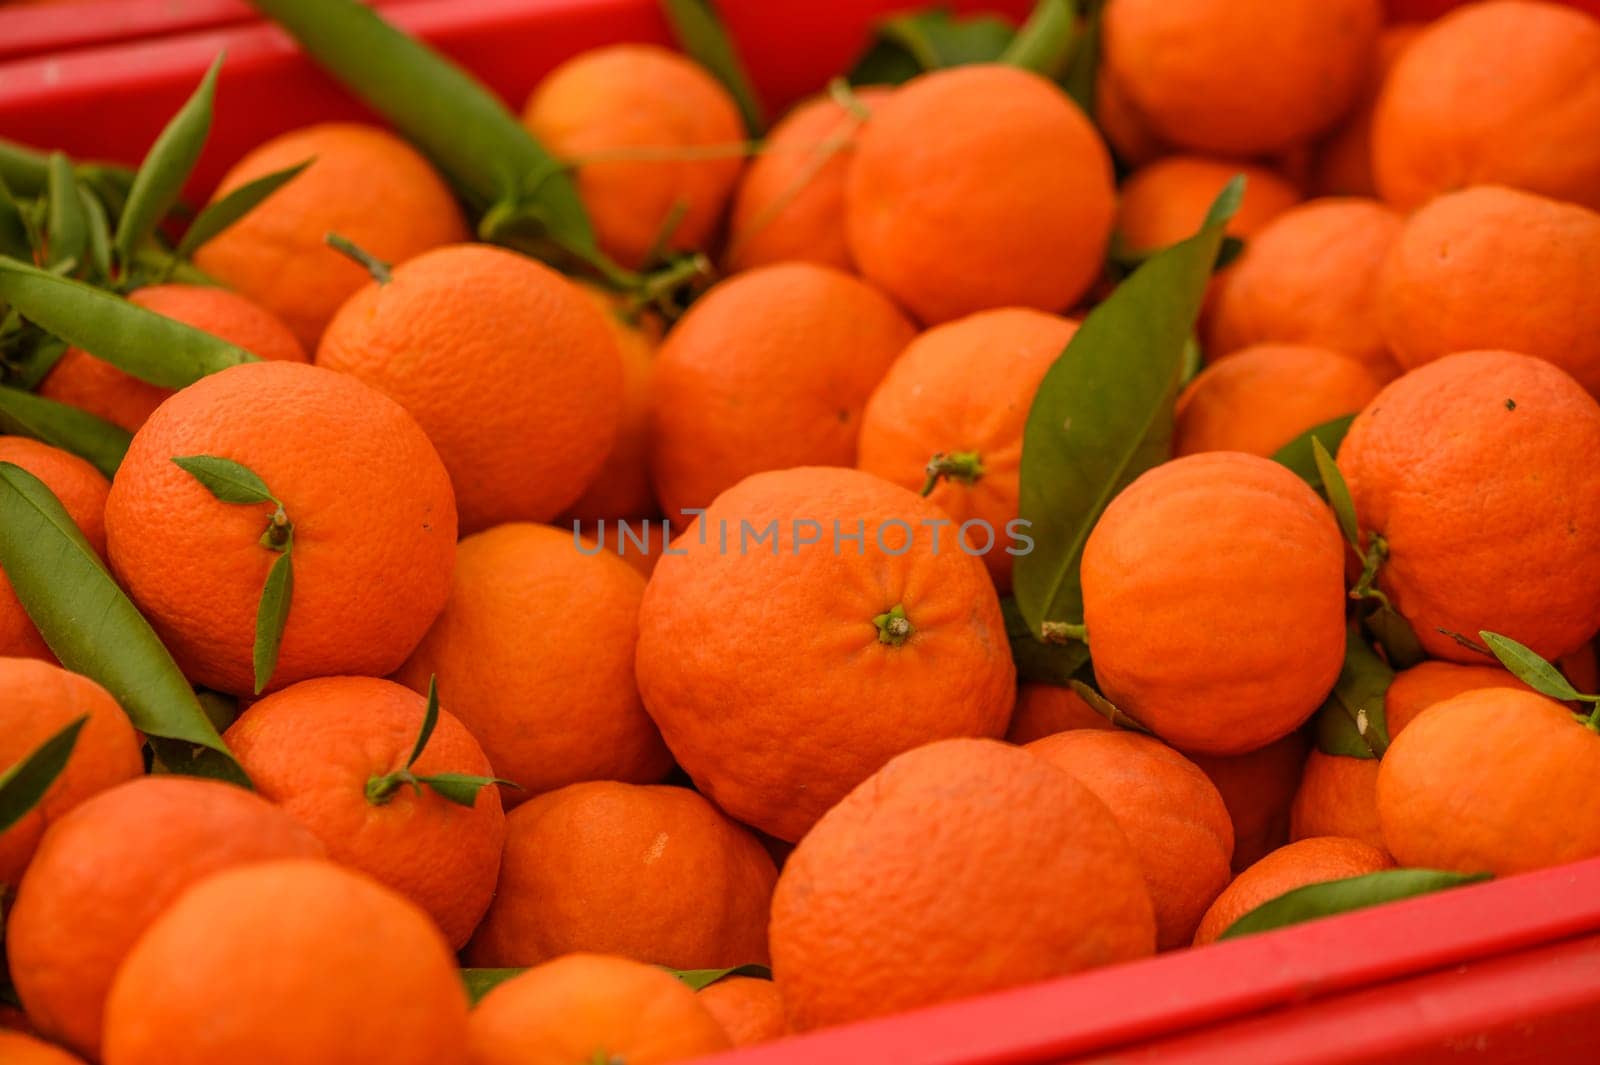 juicy fresh tangerines in boxes for sale in Cyprus in winter 2